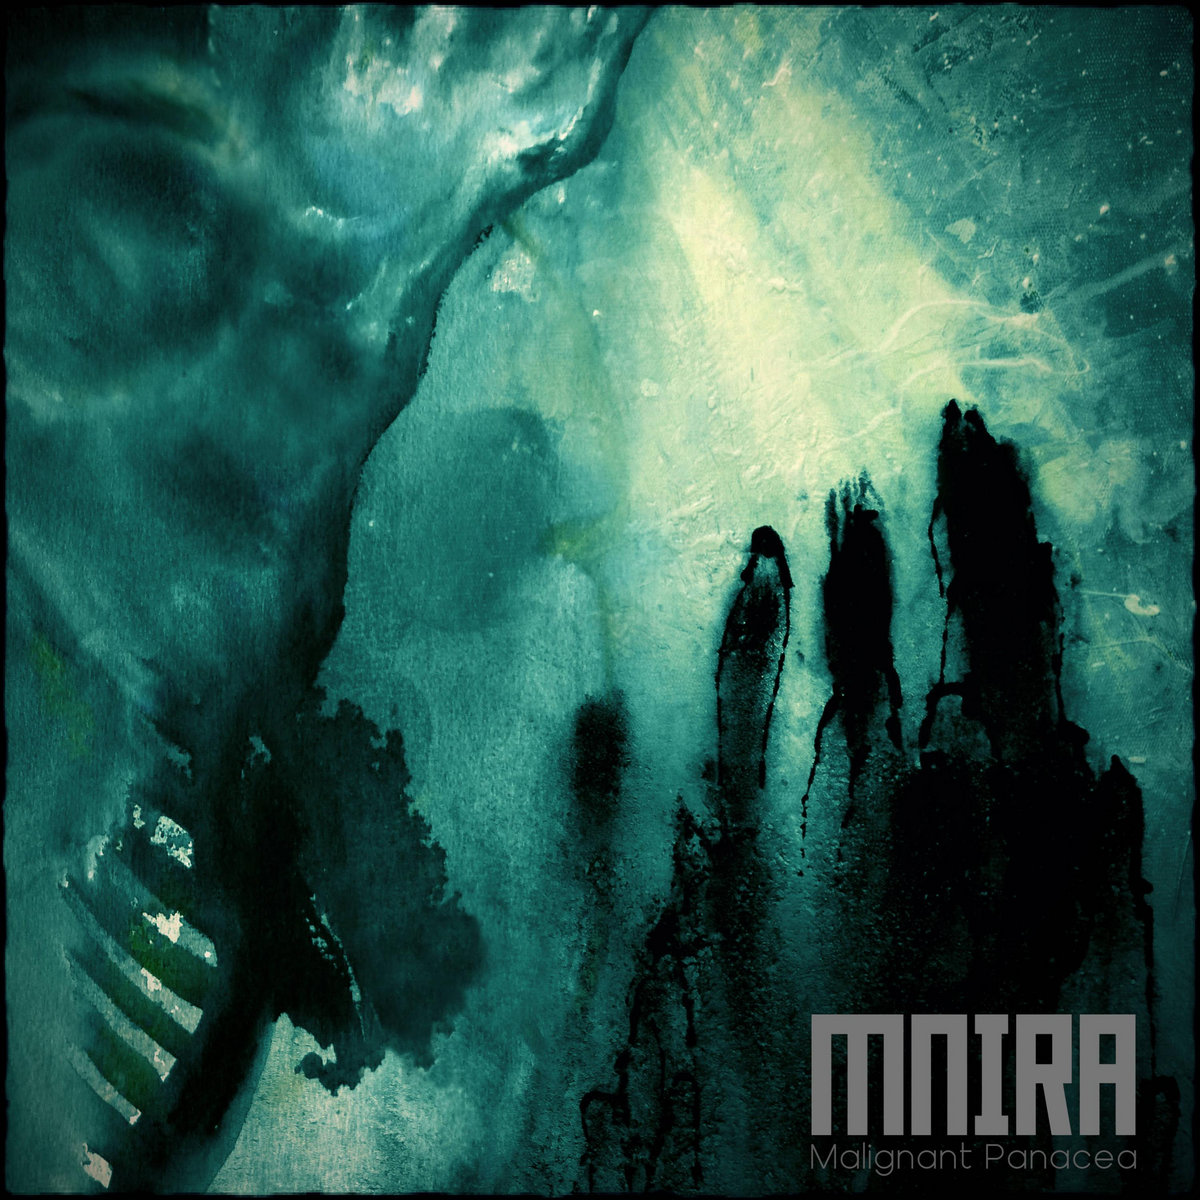 Mnira - Malignant Panacea